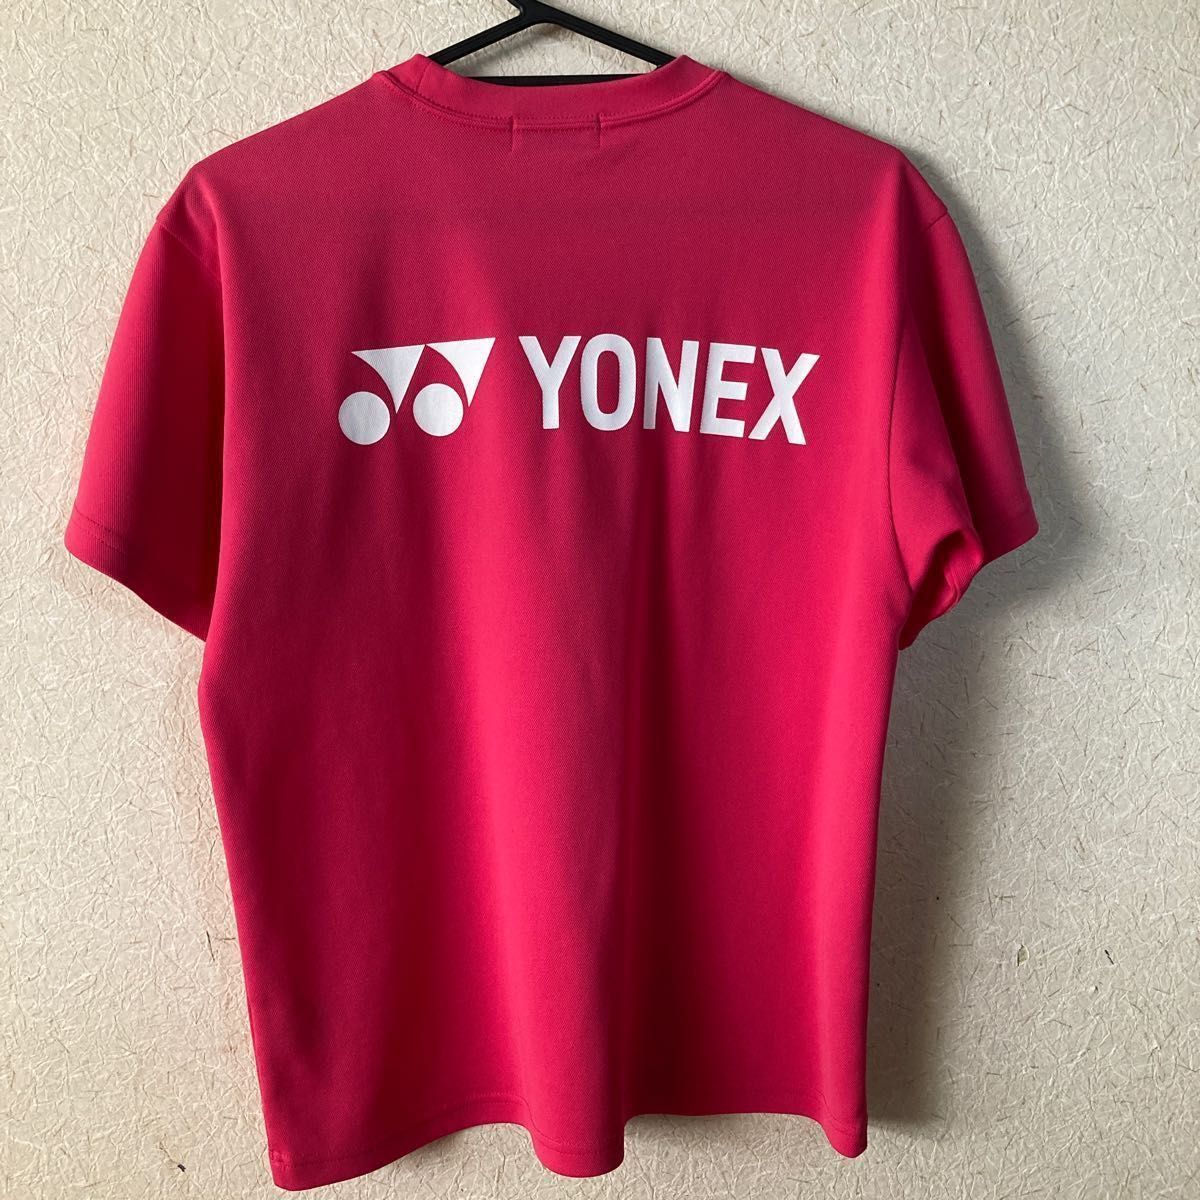 YONEX Tシャツ ピンク SSサイズ 練習着 バドミントン テニス